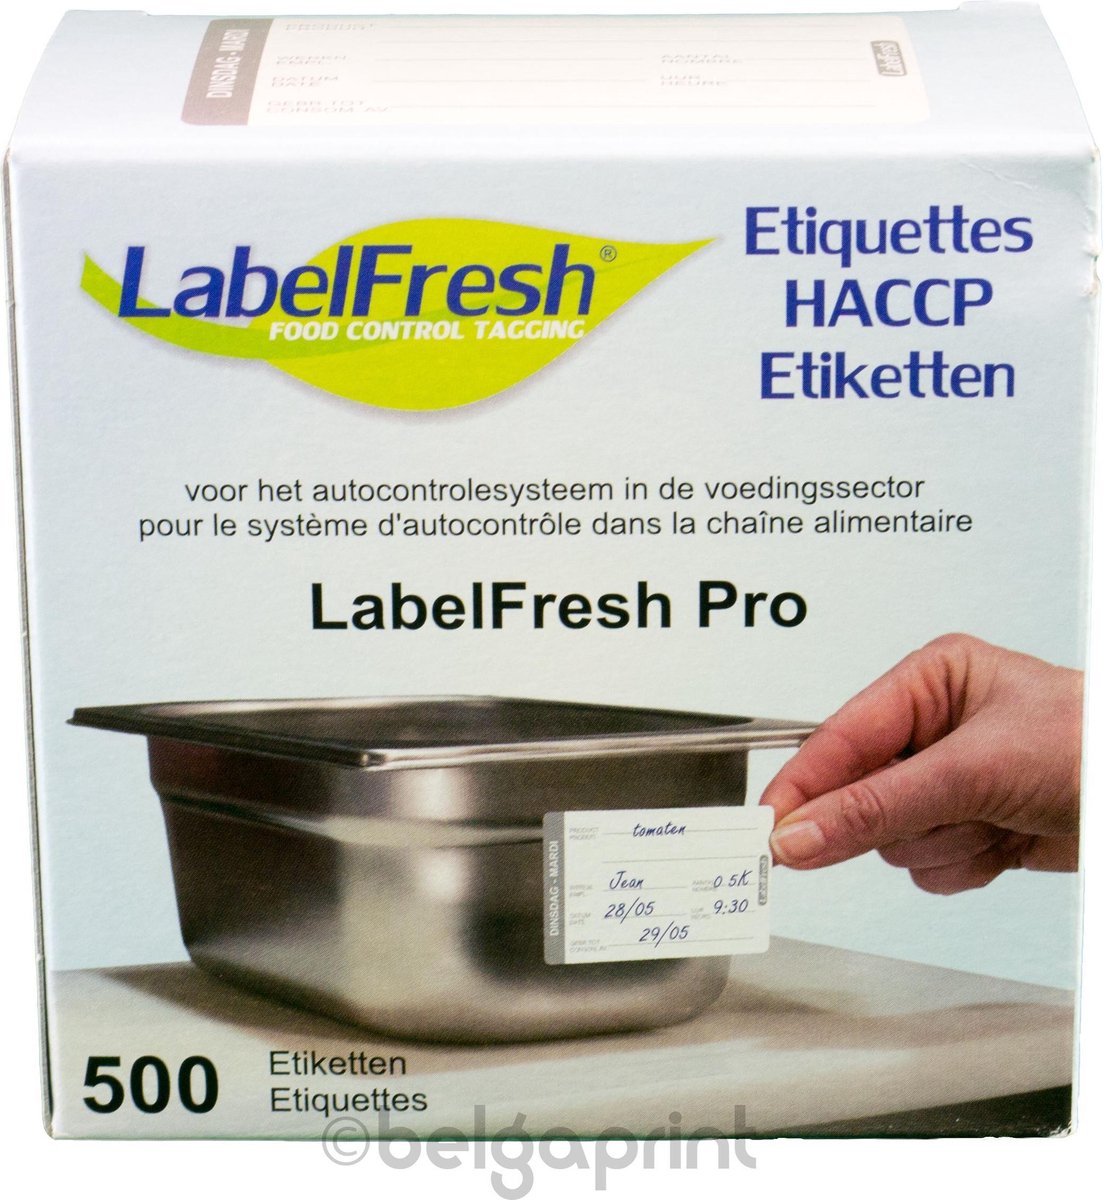 500 LabelFresh Pro - 70x45 mm - dinsdag-mardi - HACCP etiketten / stickers